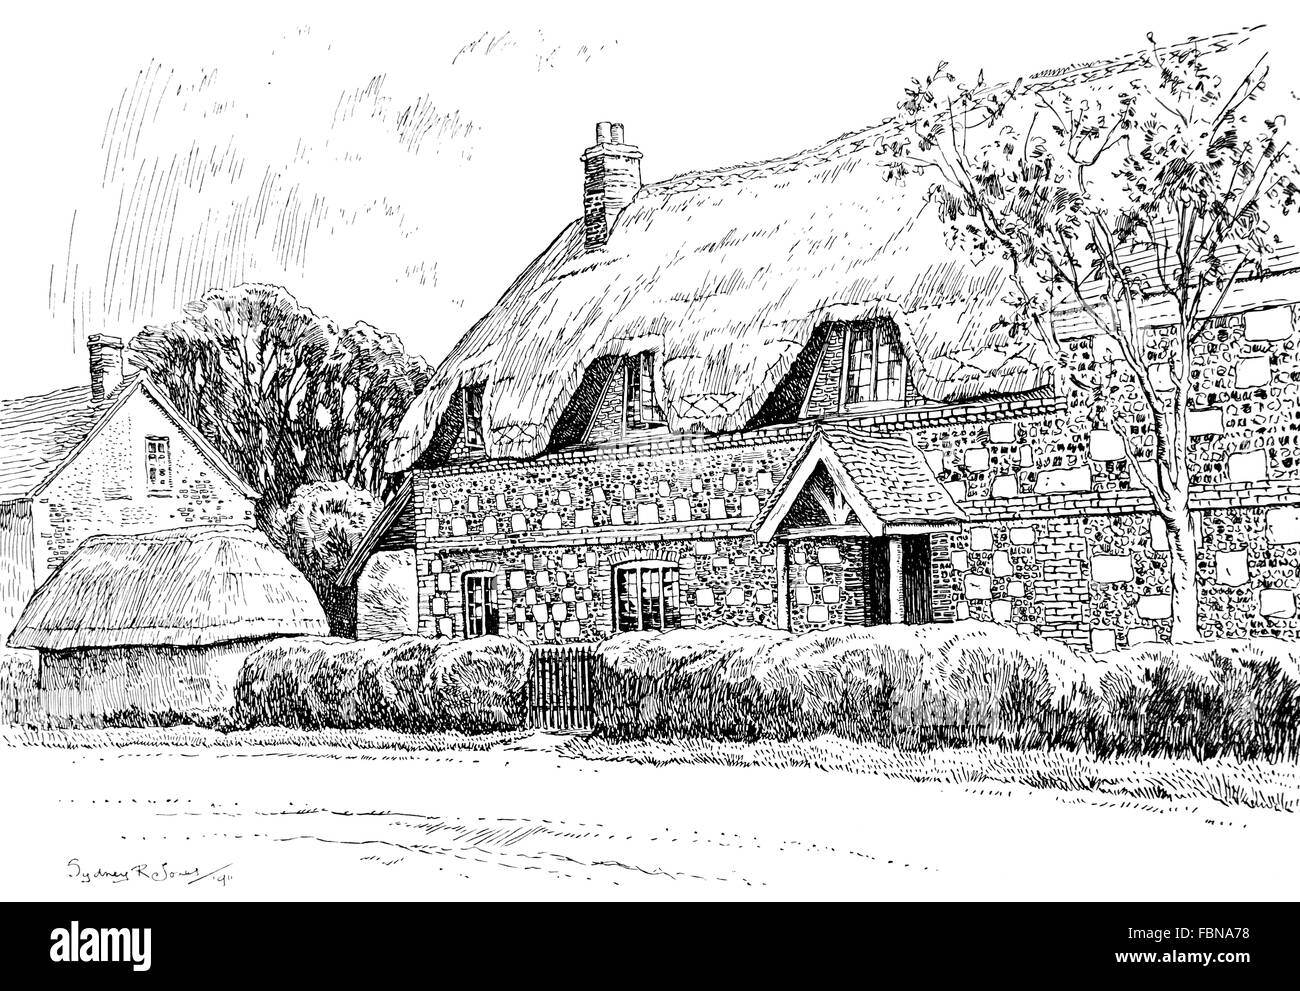 UK, England, Wiltshire, Lower, Woodford, old brick and stone farmhouse, 1911 line illustration by Sydney R Jones Stock Photo